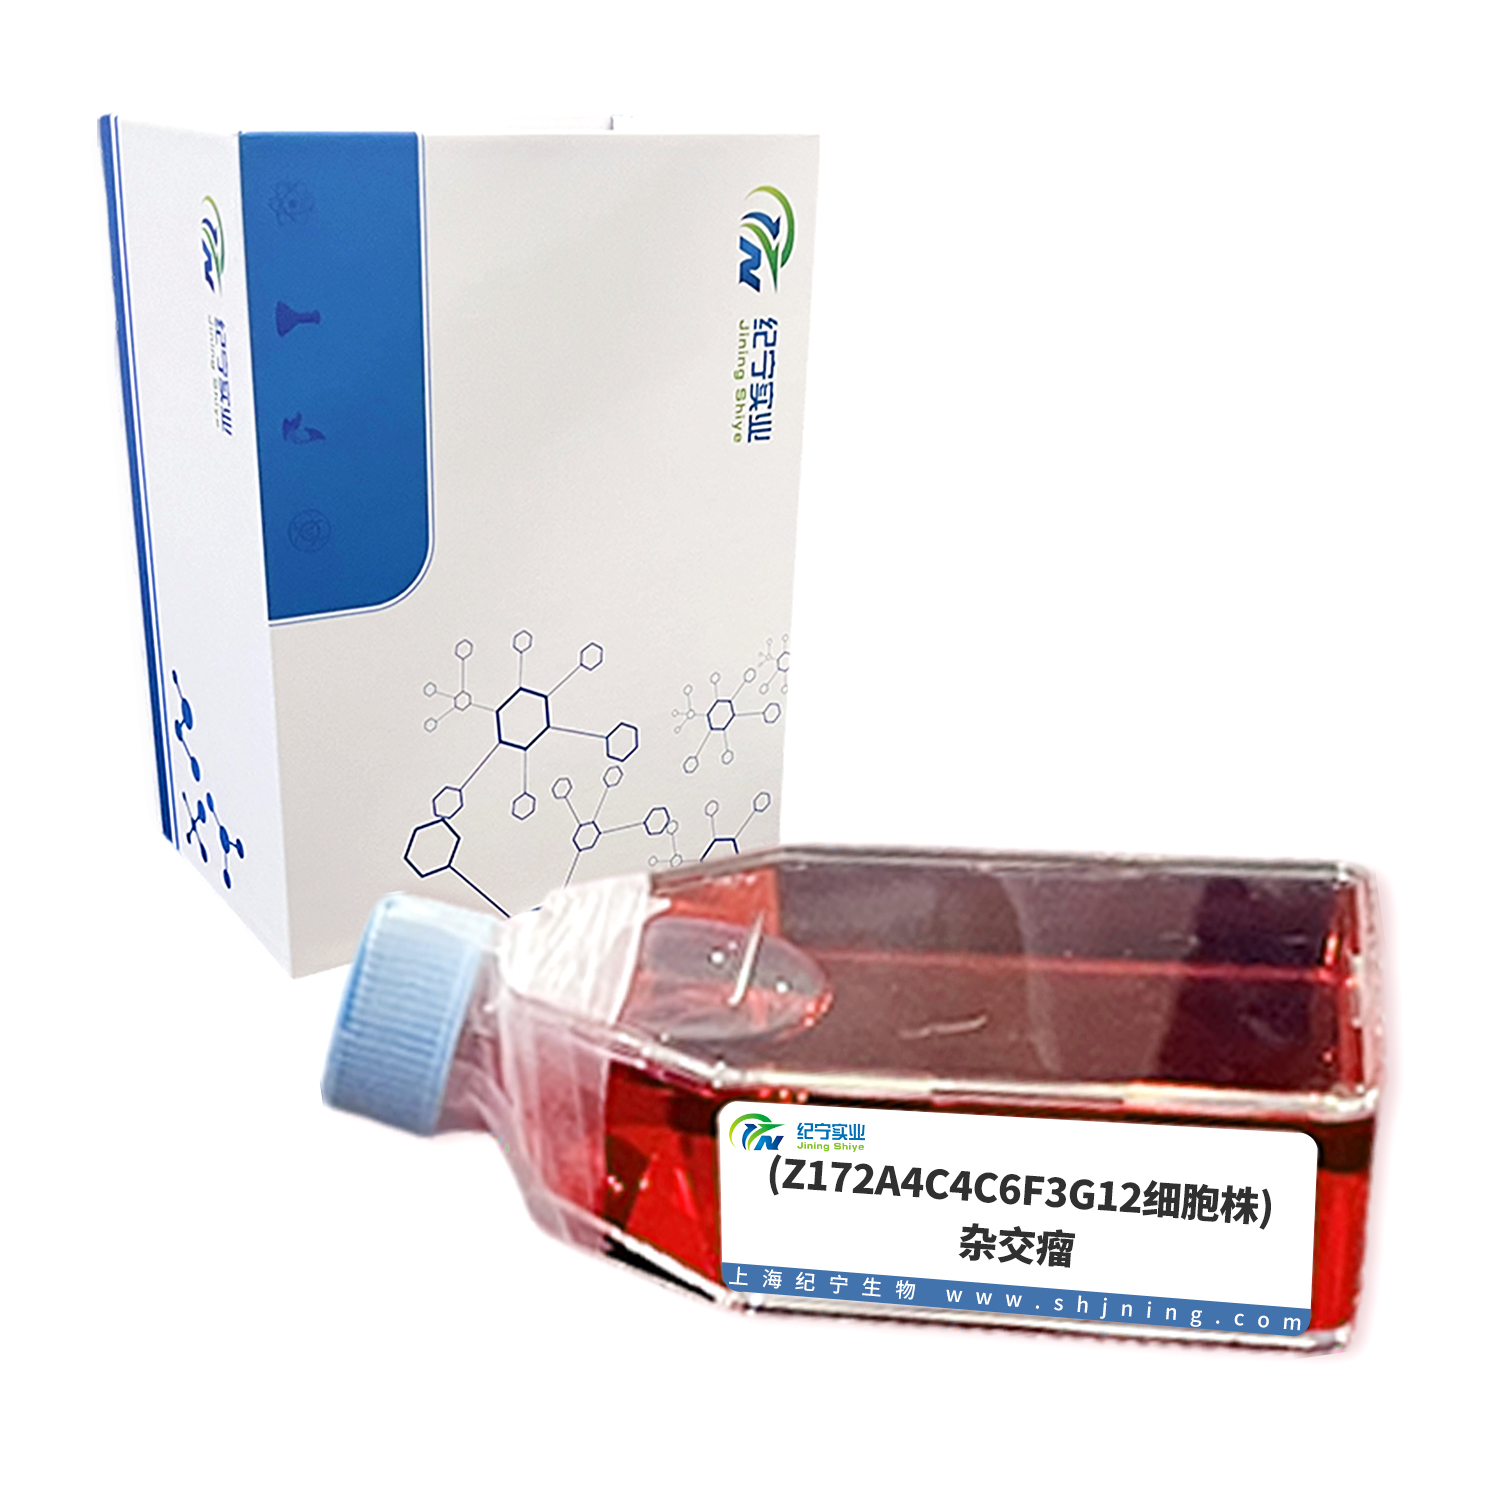 (Z172A4C4C6F3G12细胞株)杂交瘤